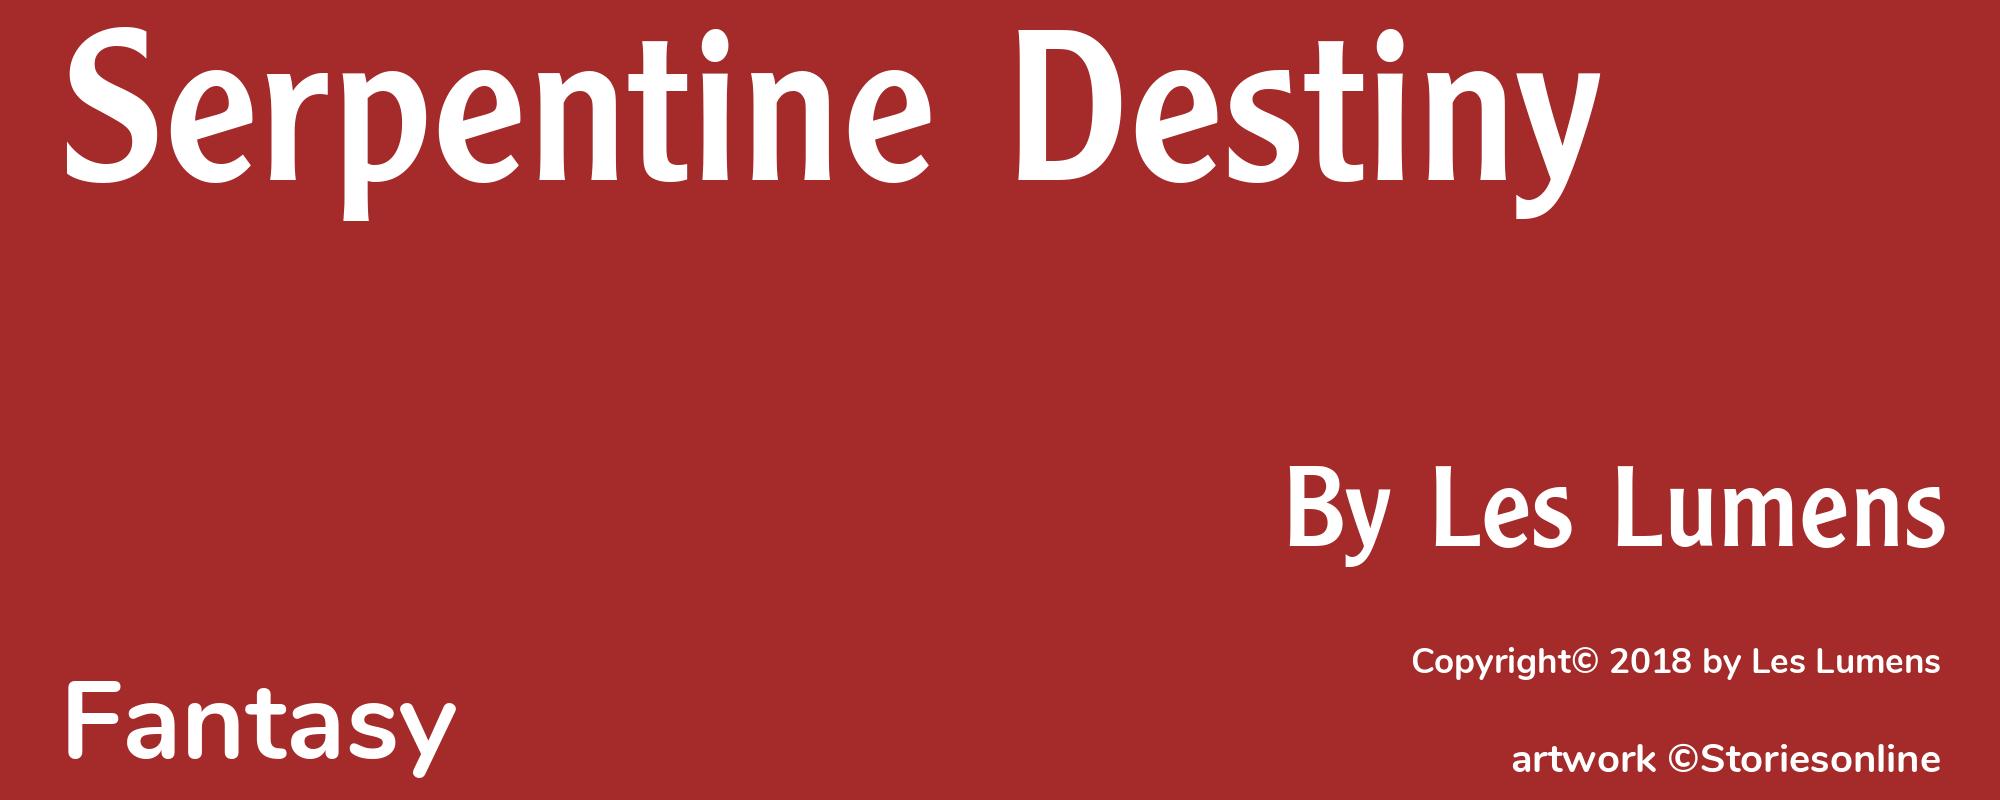 Serpentine Destiny - Cover